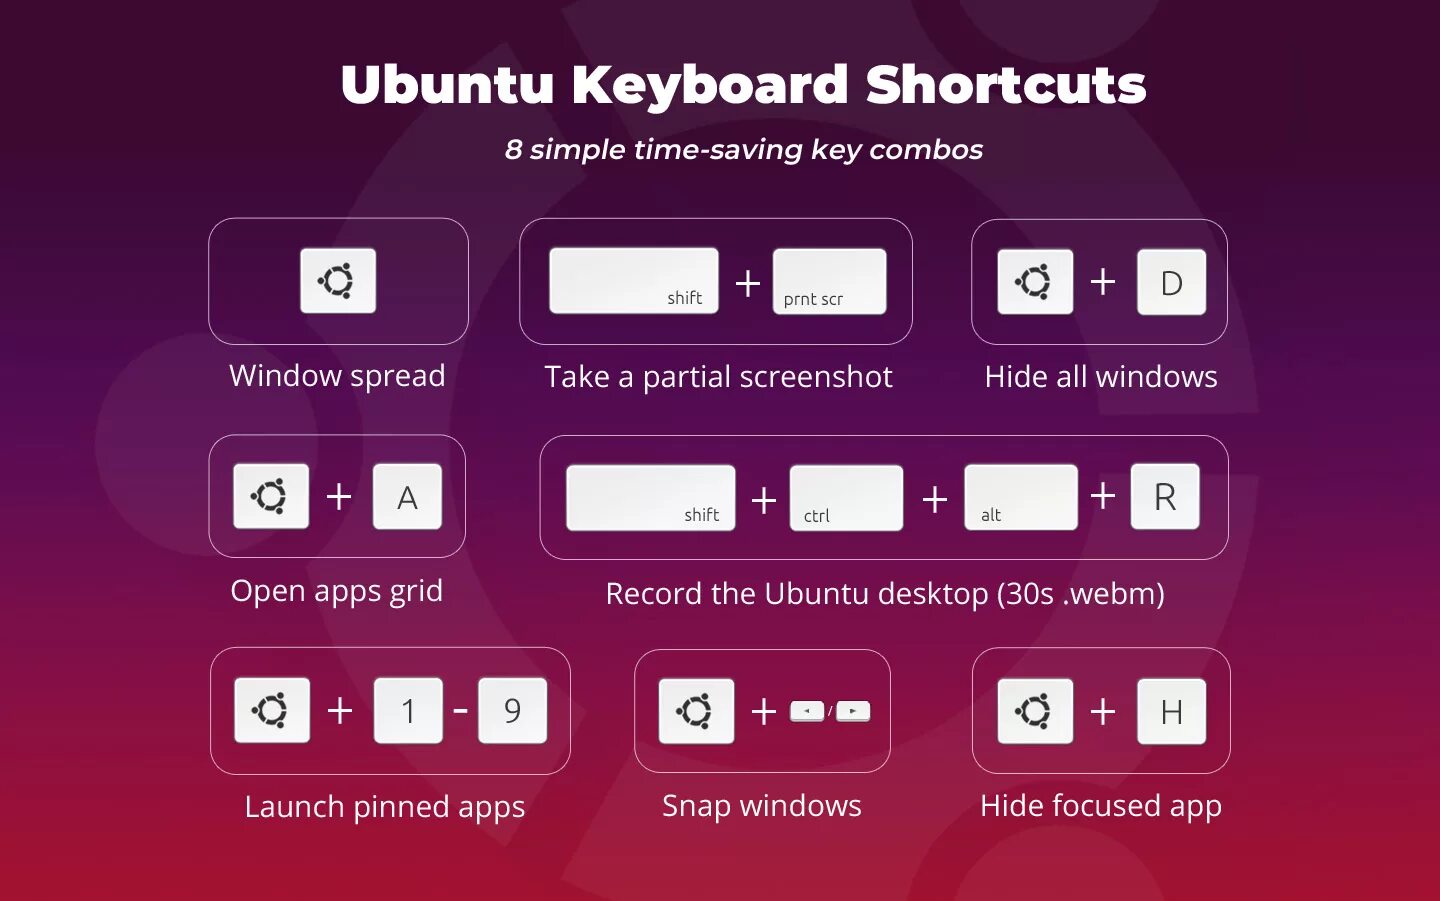 Горячие клавиши терминал. Горячие клавиши Linux. Ubuntu Keyboard shortcuts. Горячие клавиши убунту. Горячие клавиши Ubuntu.